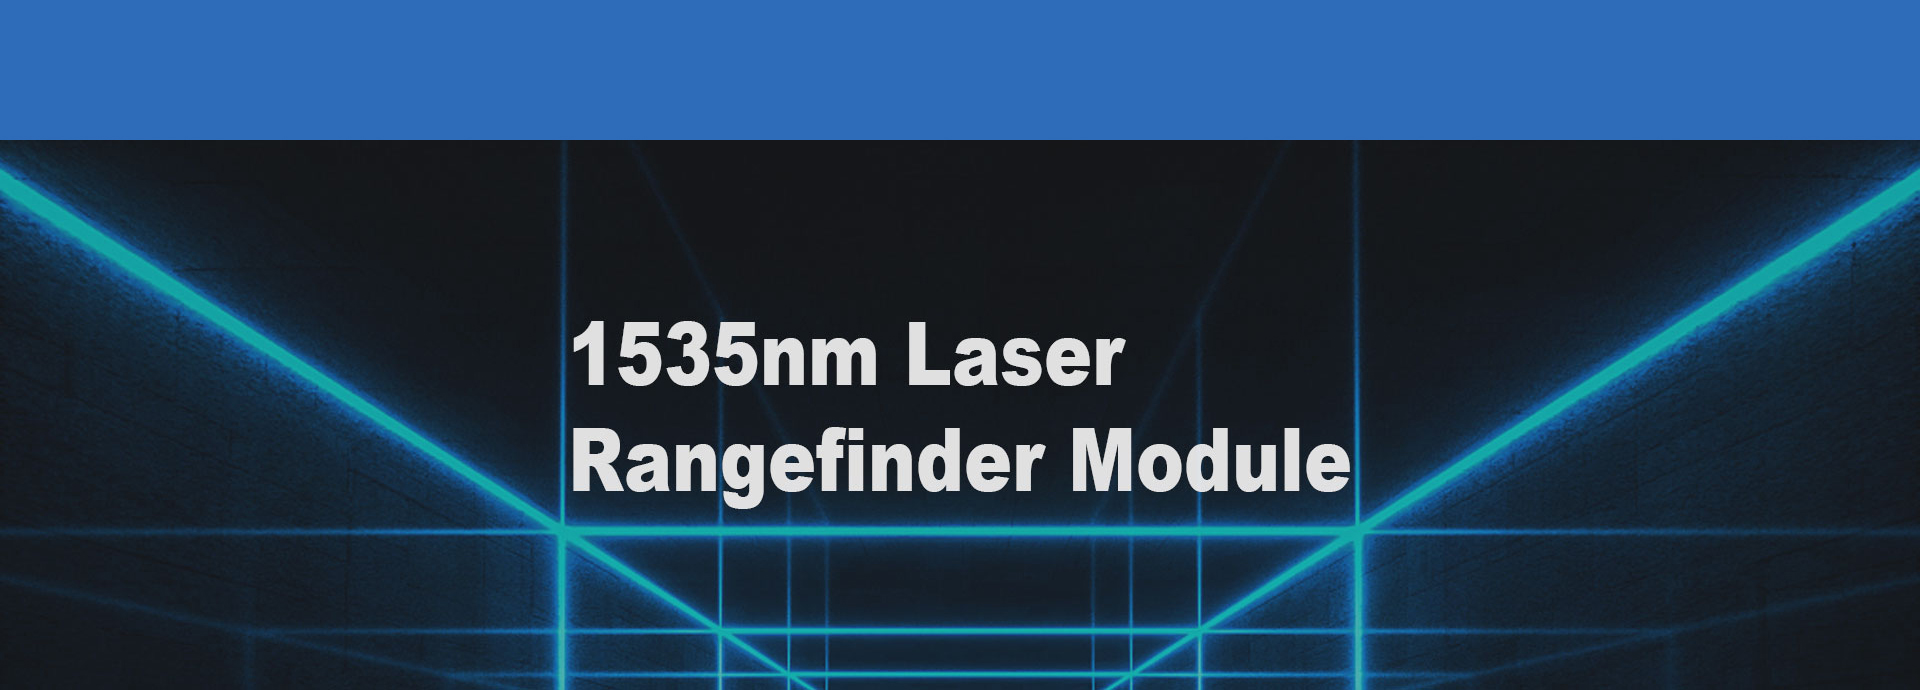 25km Laser Range Finder Module